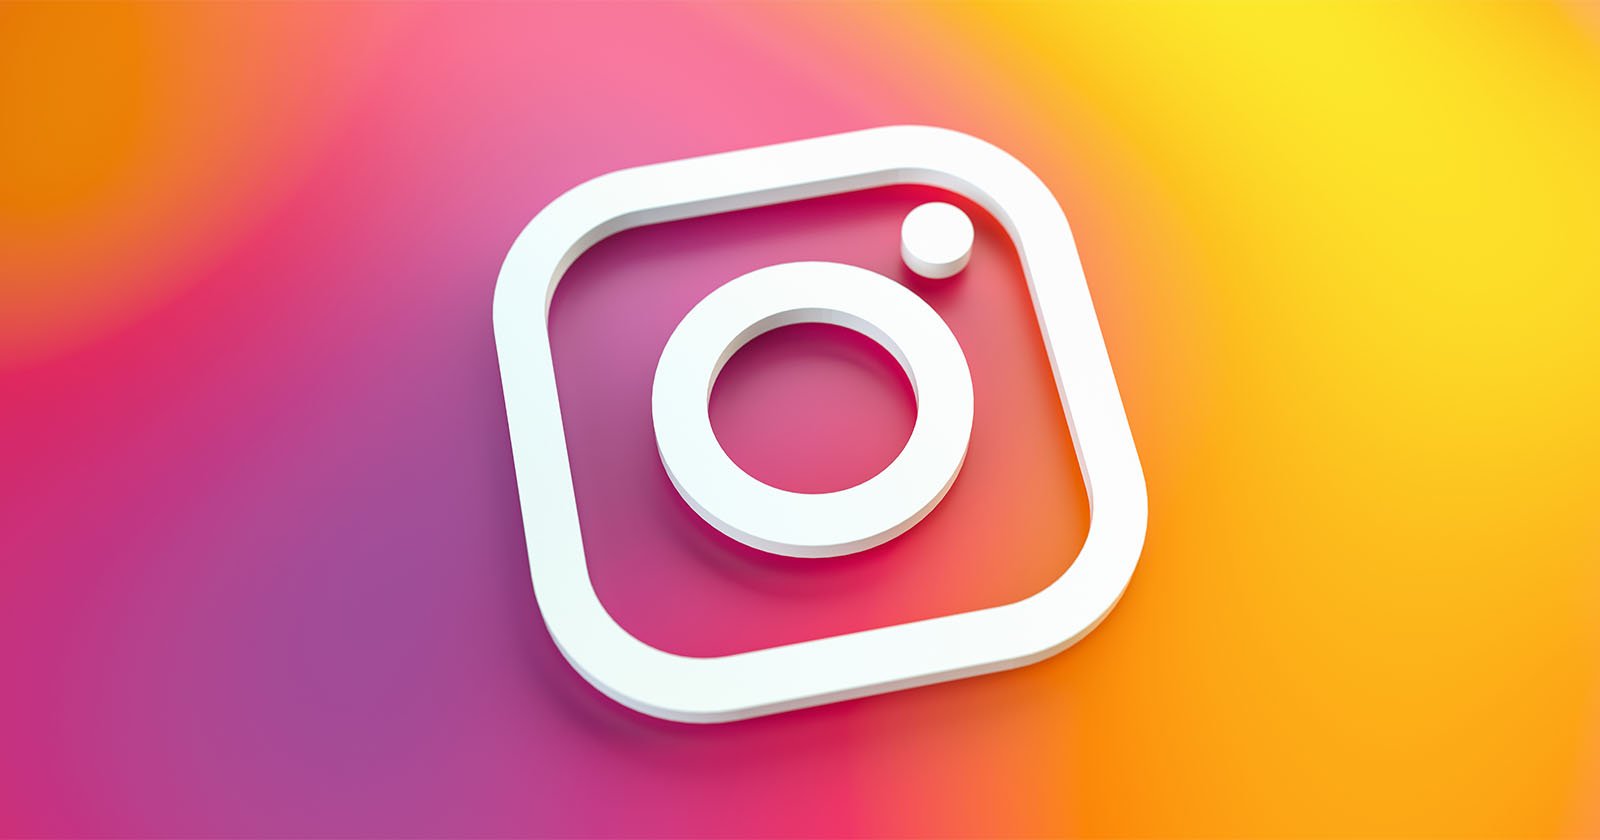  instagram algorithm punishes copycats rewards original creators 